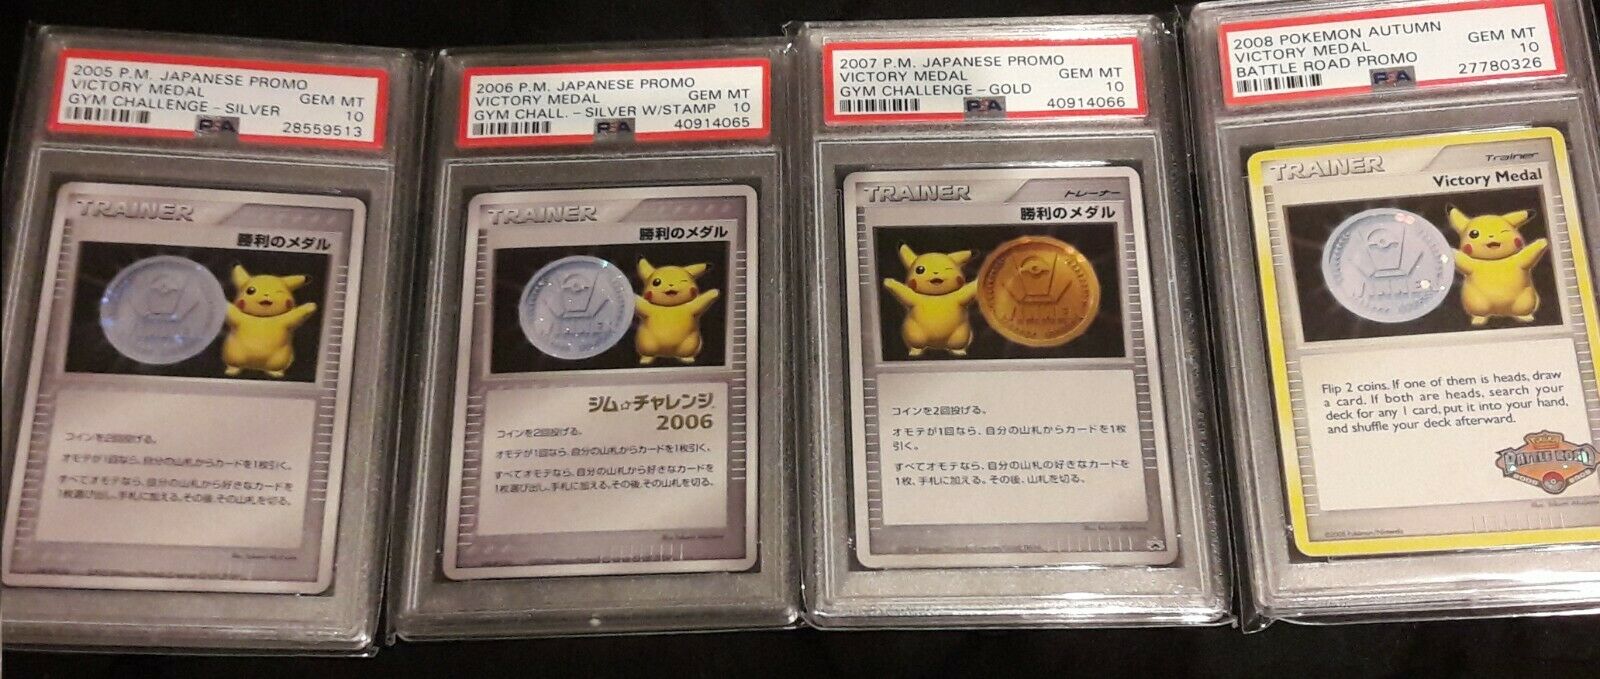 Pokemon PSA 10 Pikachu Victory Medals 2005 2006 2007 2008 Battle Road  Gym